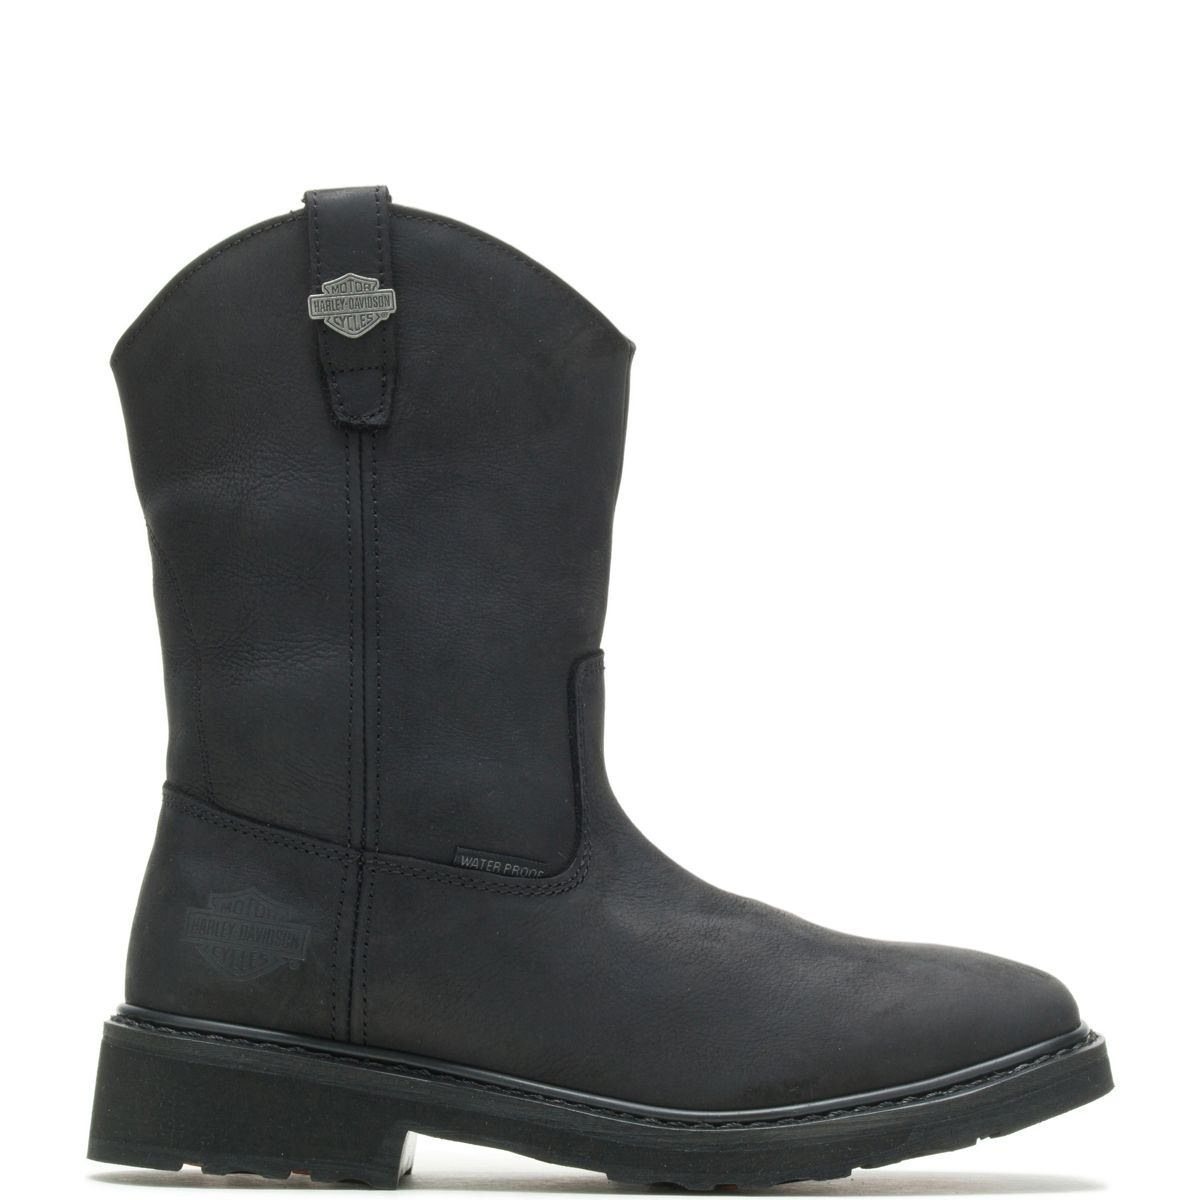 HARLEY-DAVIDSON WORK Men's Altman Western Classic Soft Toe Work Boot Black - D93561 Black/black - Black/black, 8 M US